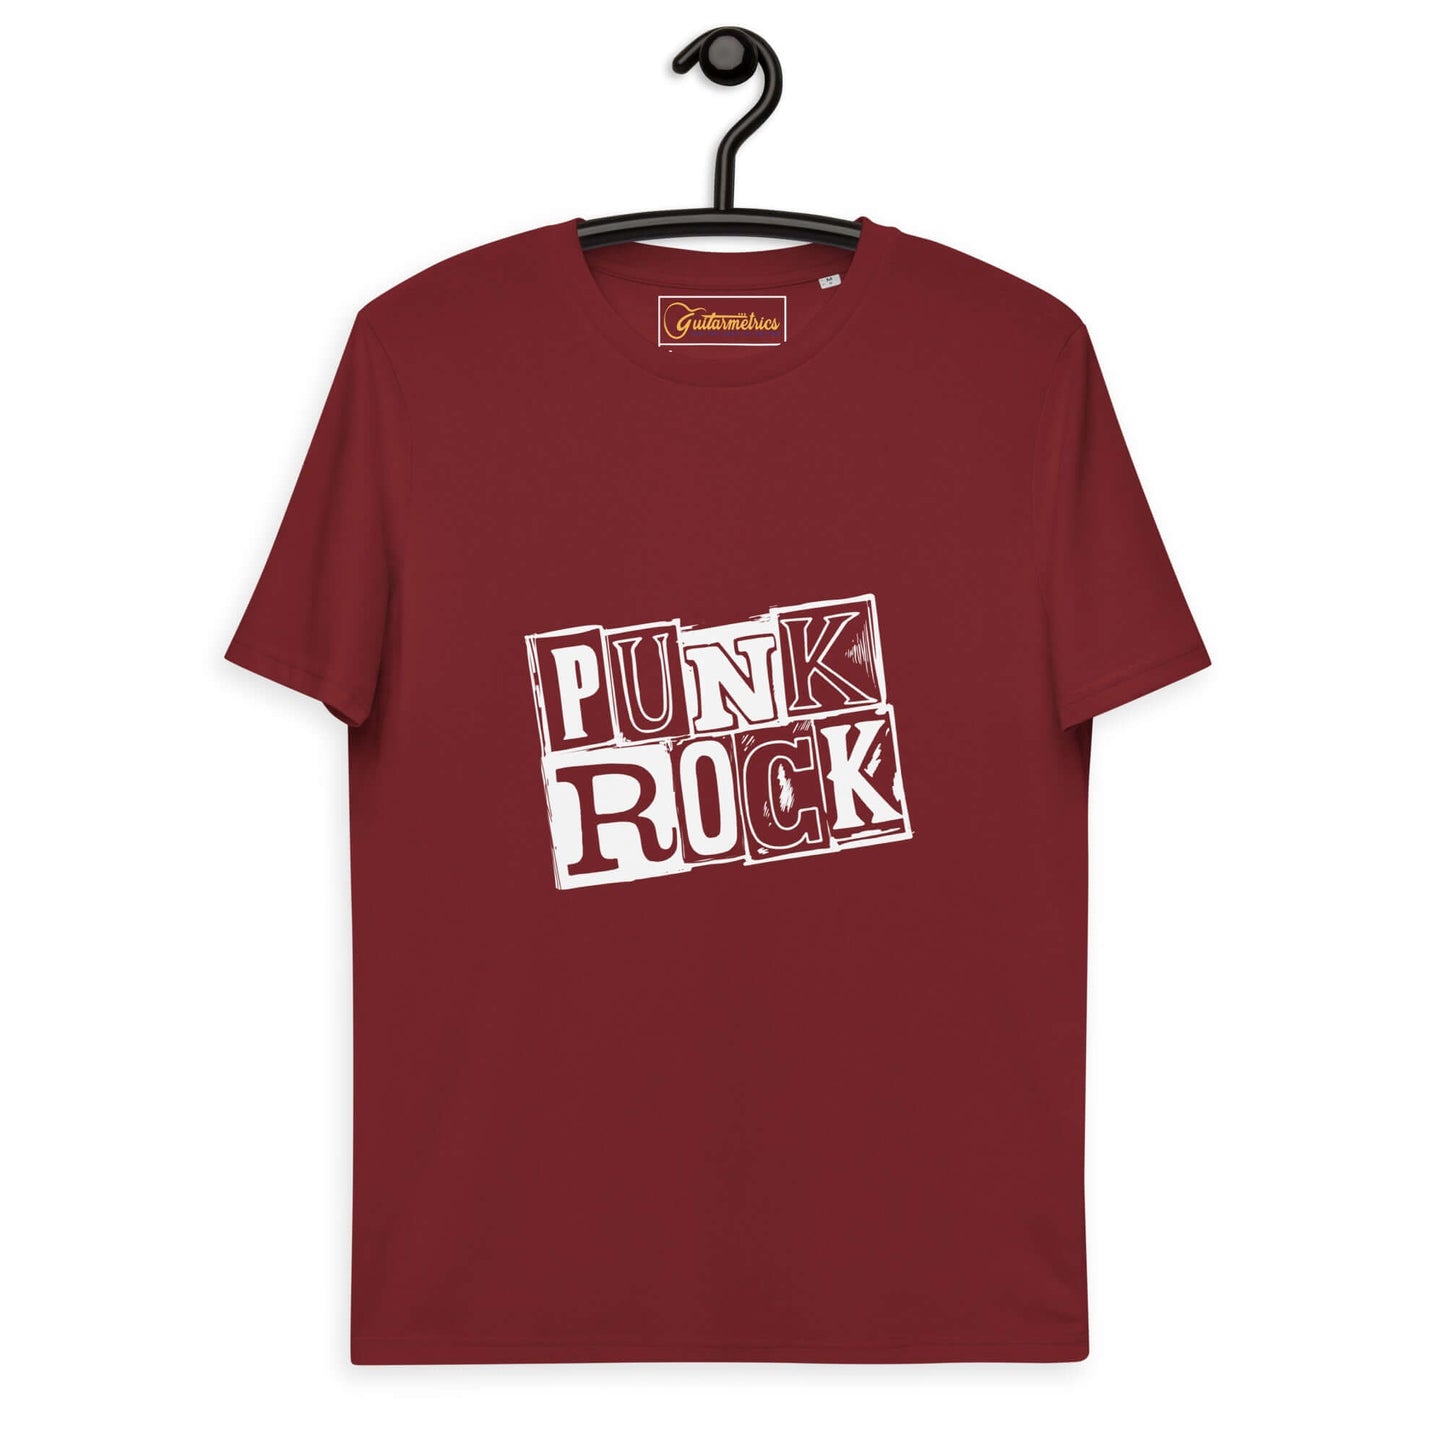 Punk Rock Unisex organic cotton t-shirt Burgundy guitarmetrics